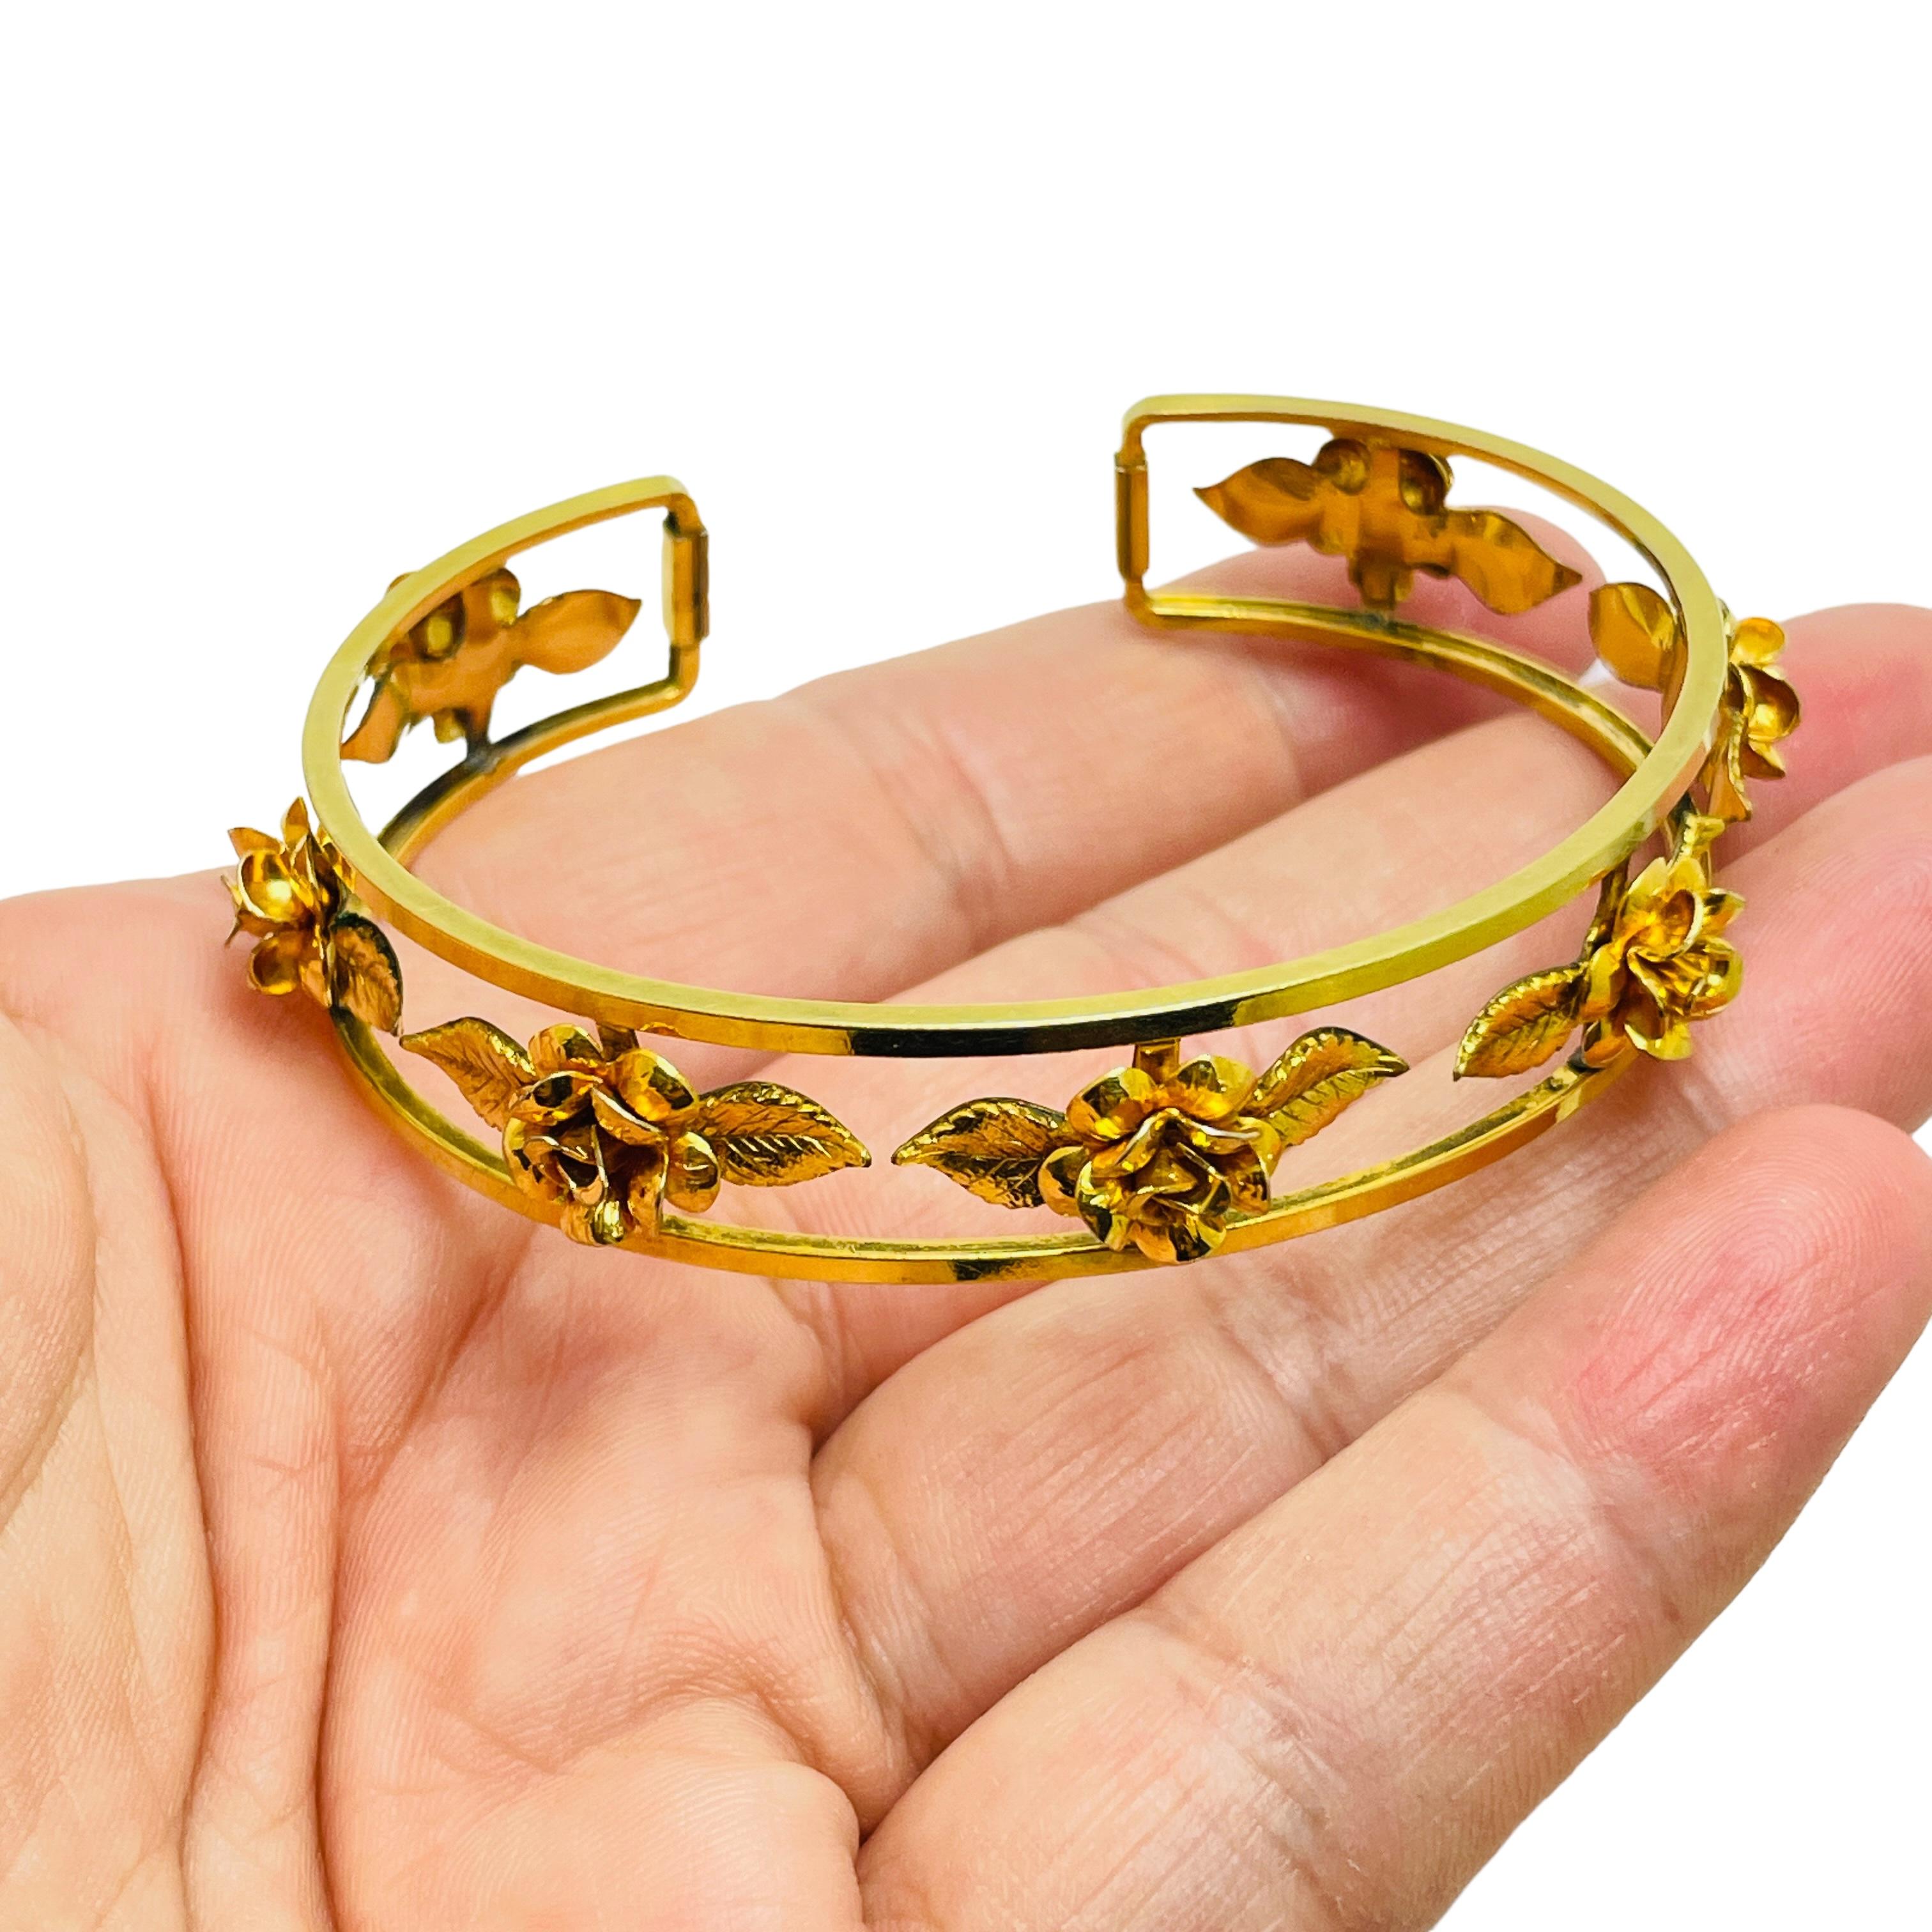 DETAILS

• unsigned

• gold tone 

• vintage designer bracelet

MEASUREMENTS

• 

CONDITION

• excellent vintage condition with minimal signs of wear

❤️❤️ VINTAGE DESIGNER JEWELRY ❤️❤️
❤️❤️ ALEXANDER'S BOUTIQUE ❤️❤️